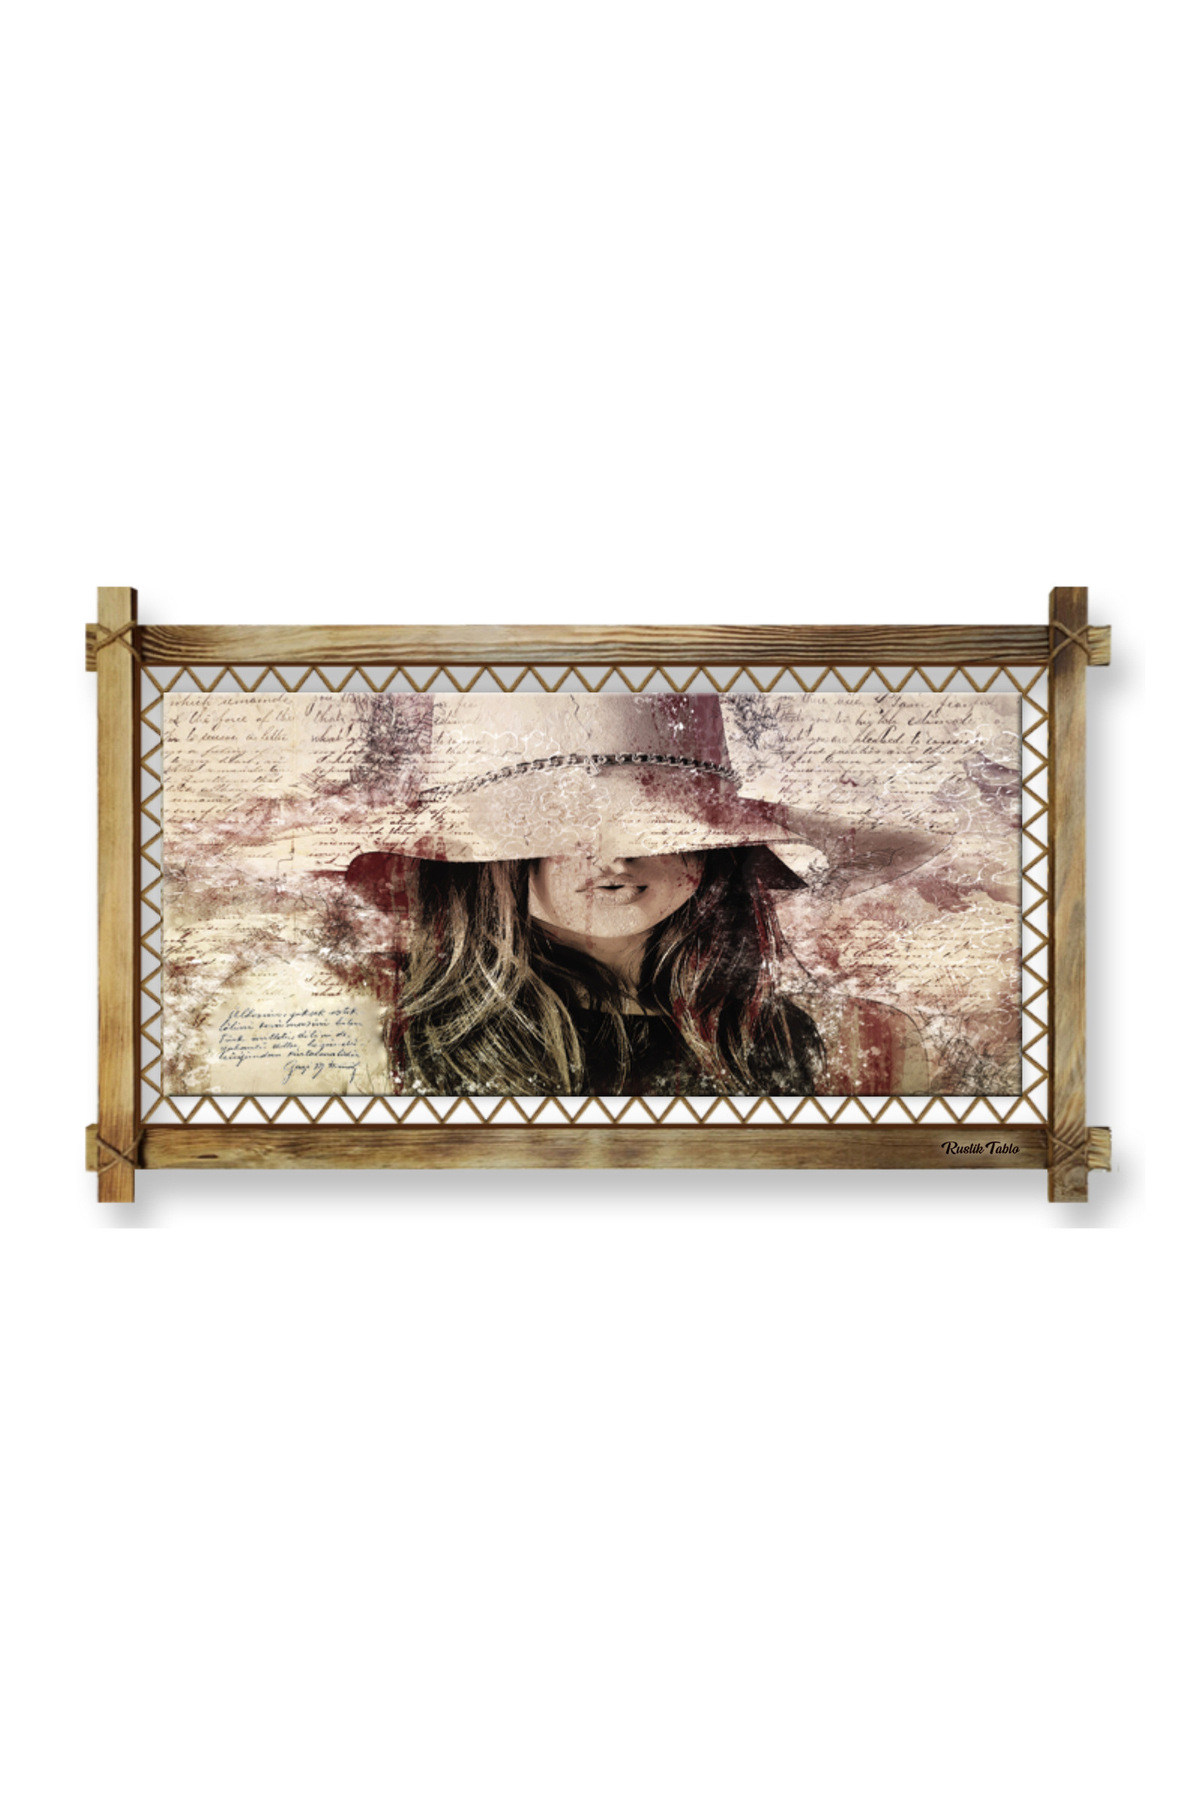 CLZ104 Şapkalı Kadın LED IŞIKLI RUSTİK kanvas tablo B  (96 x 66) cm